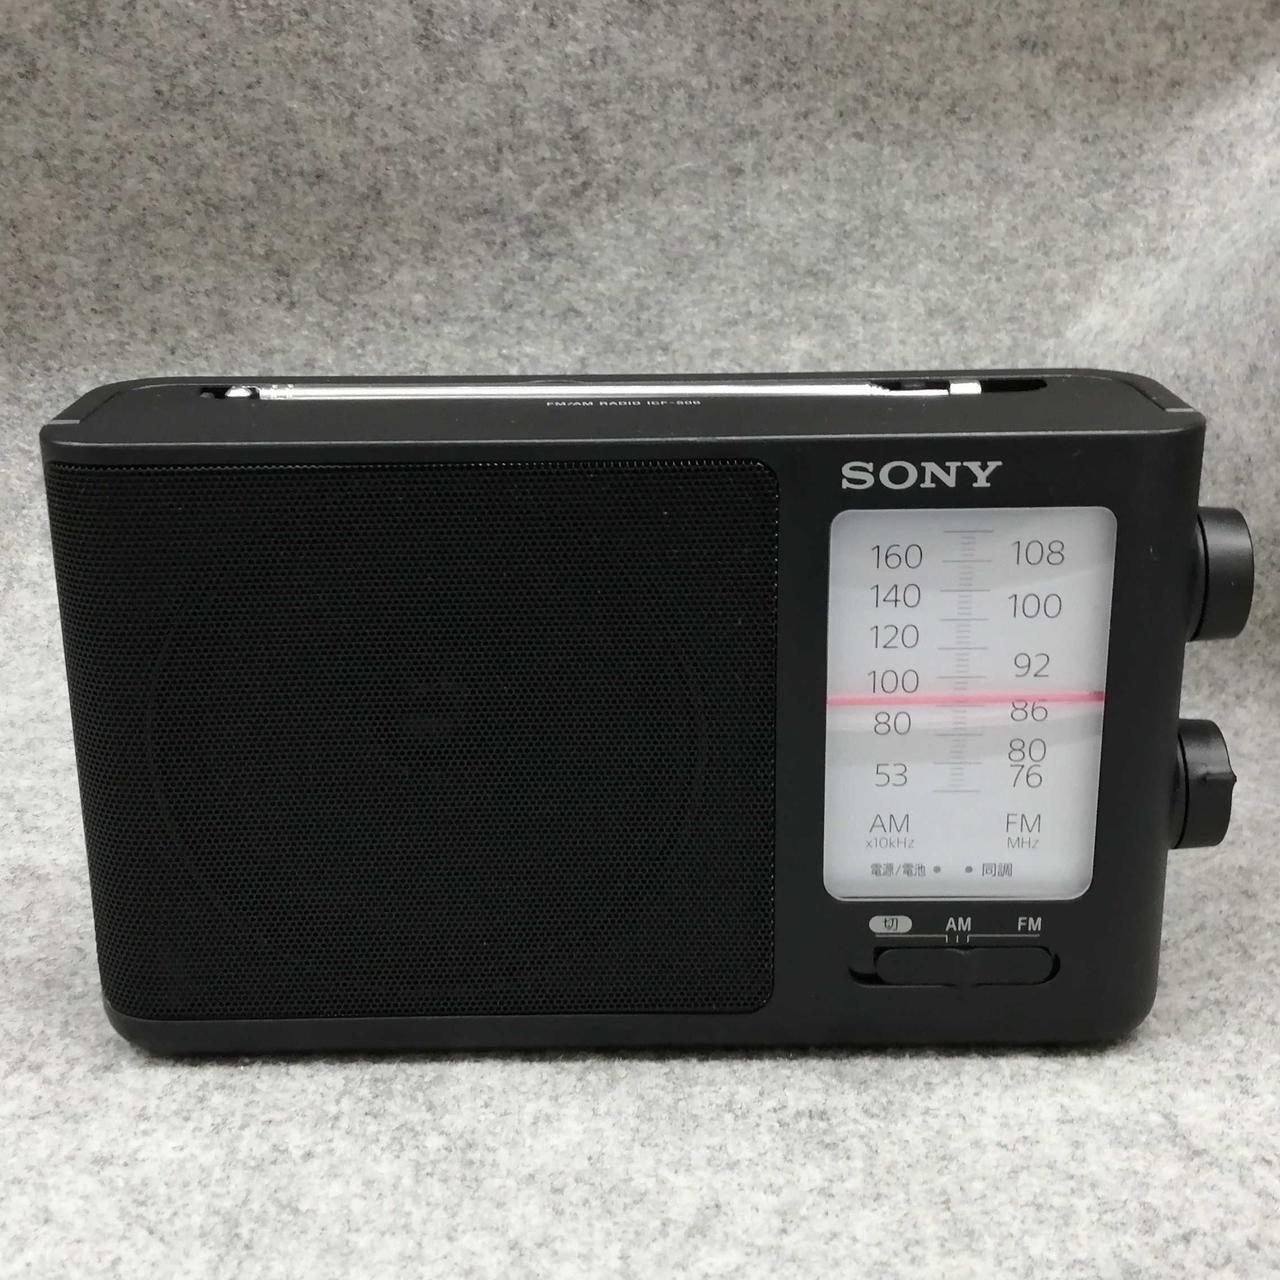 SONY ICF-506 radio black